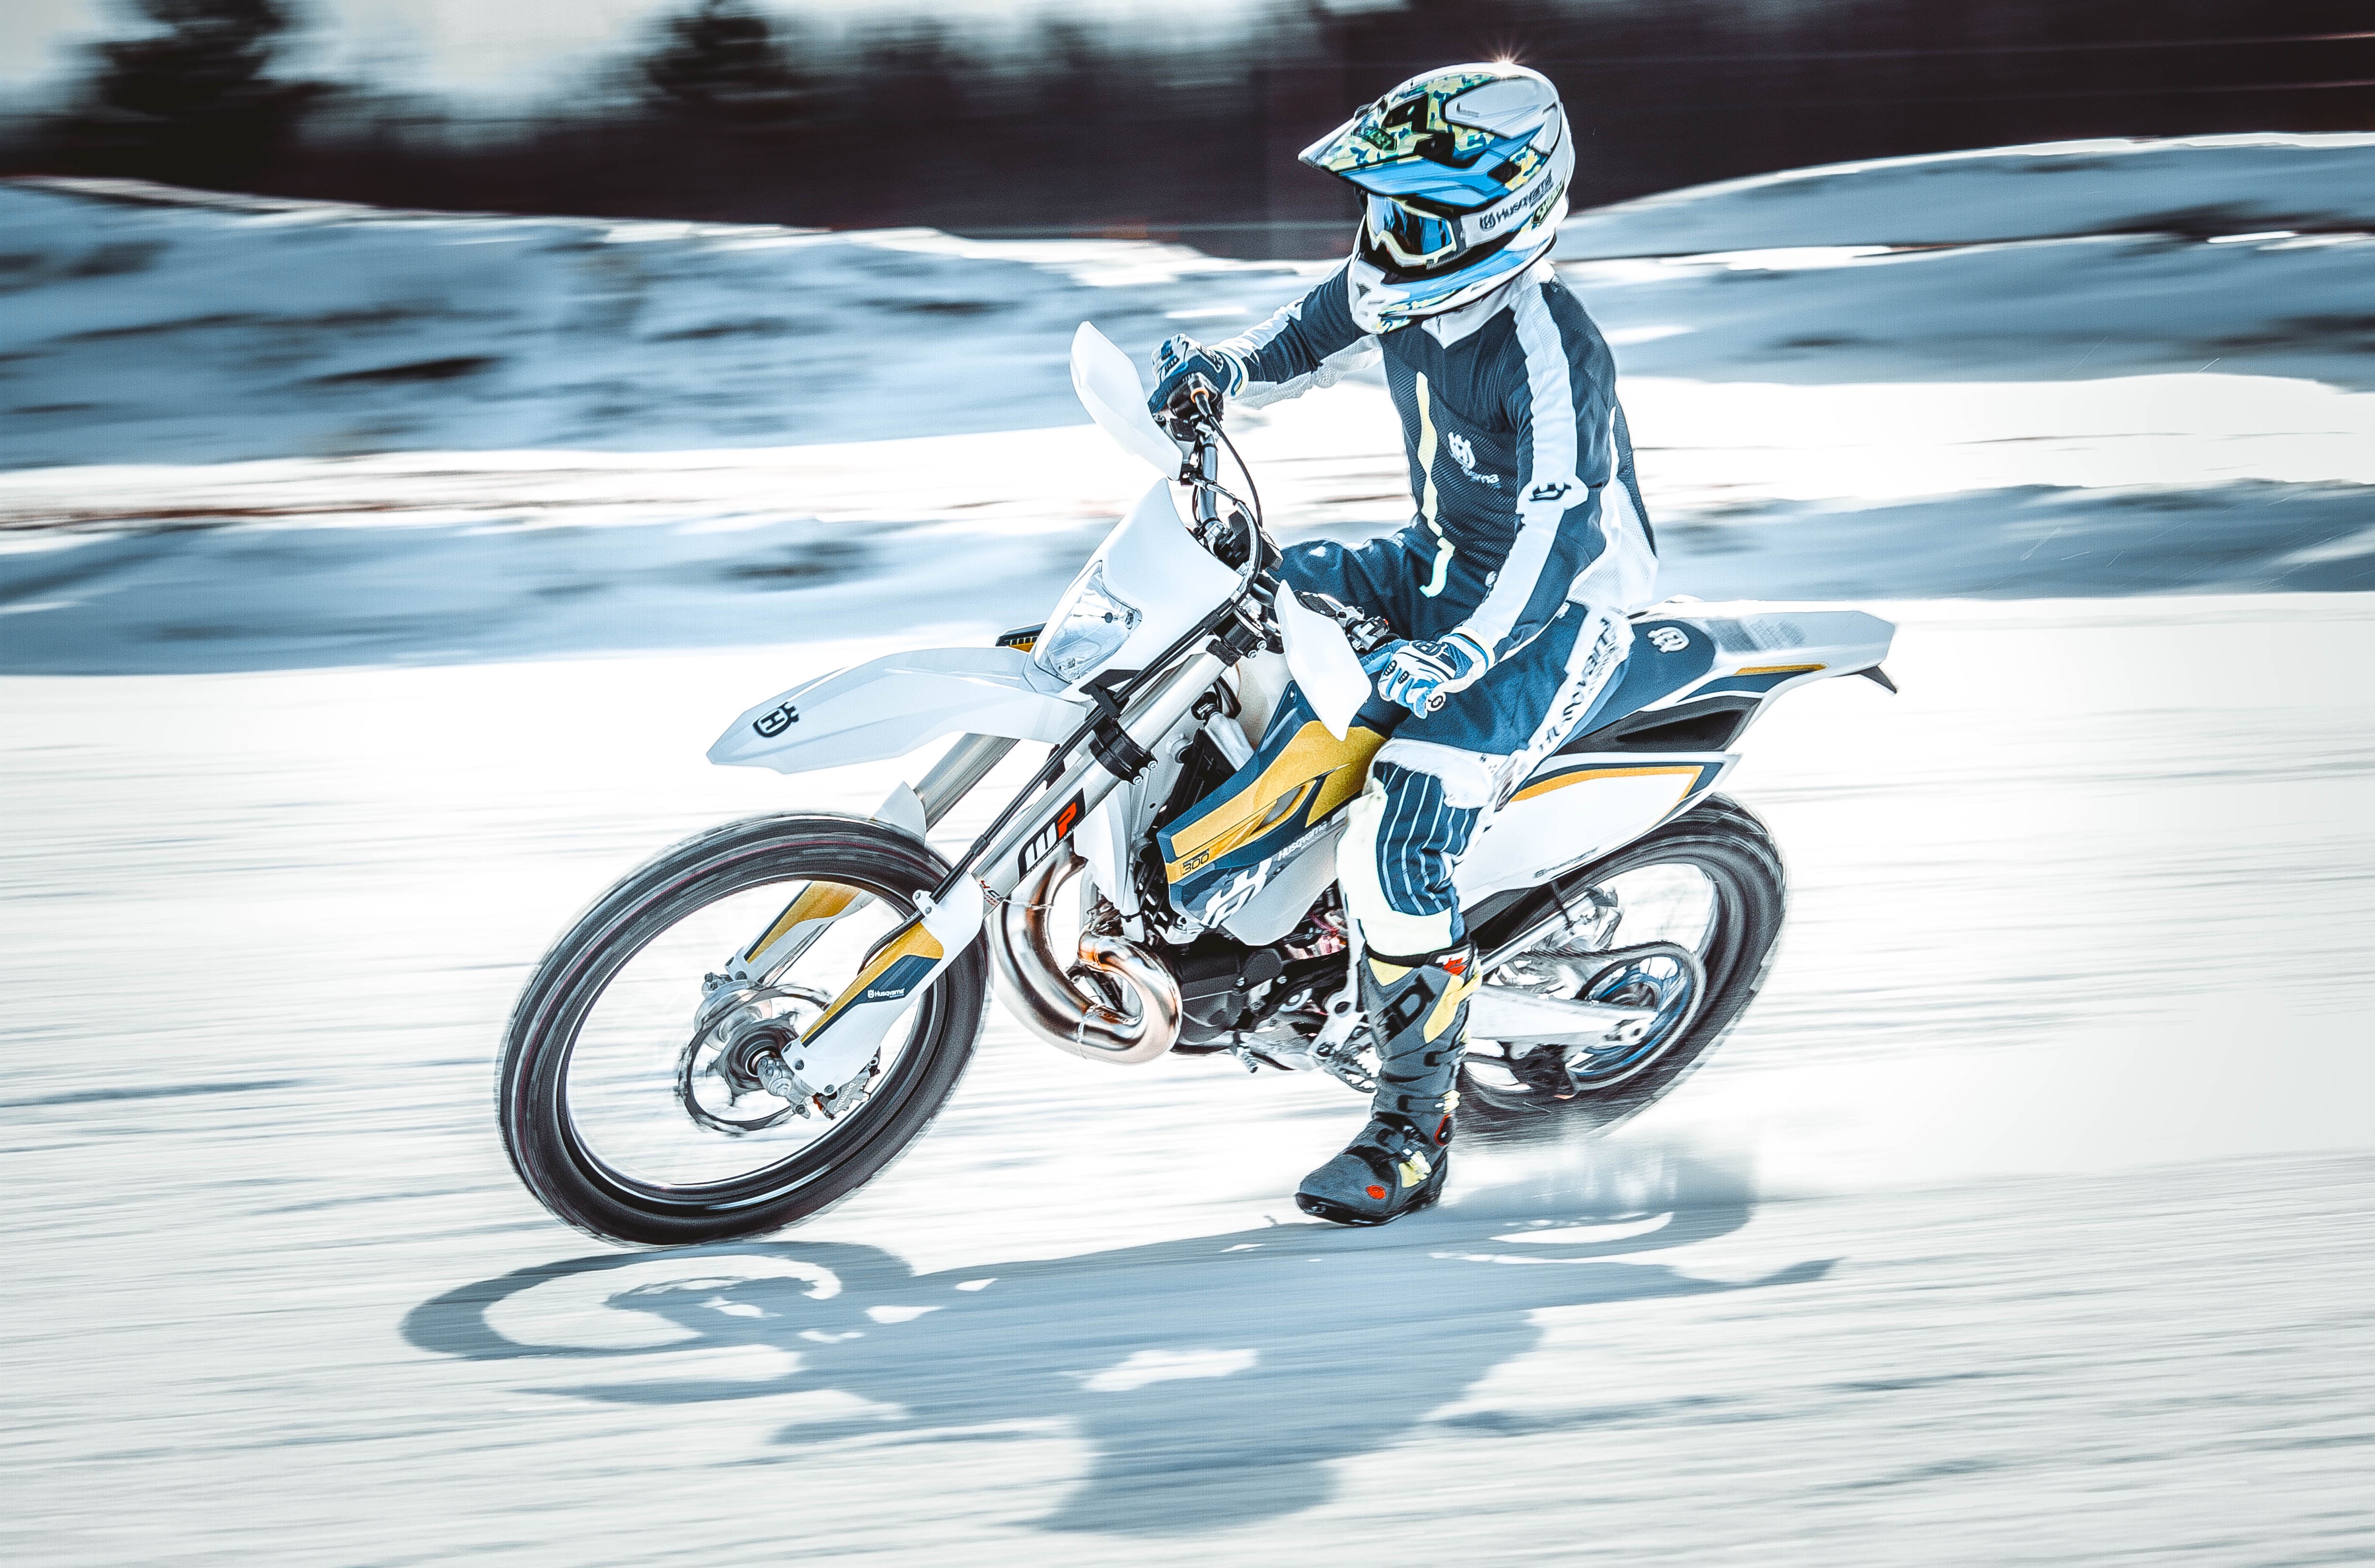 desktop Images snow, motorcycles, motorcyclist, speed